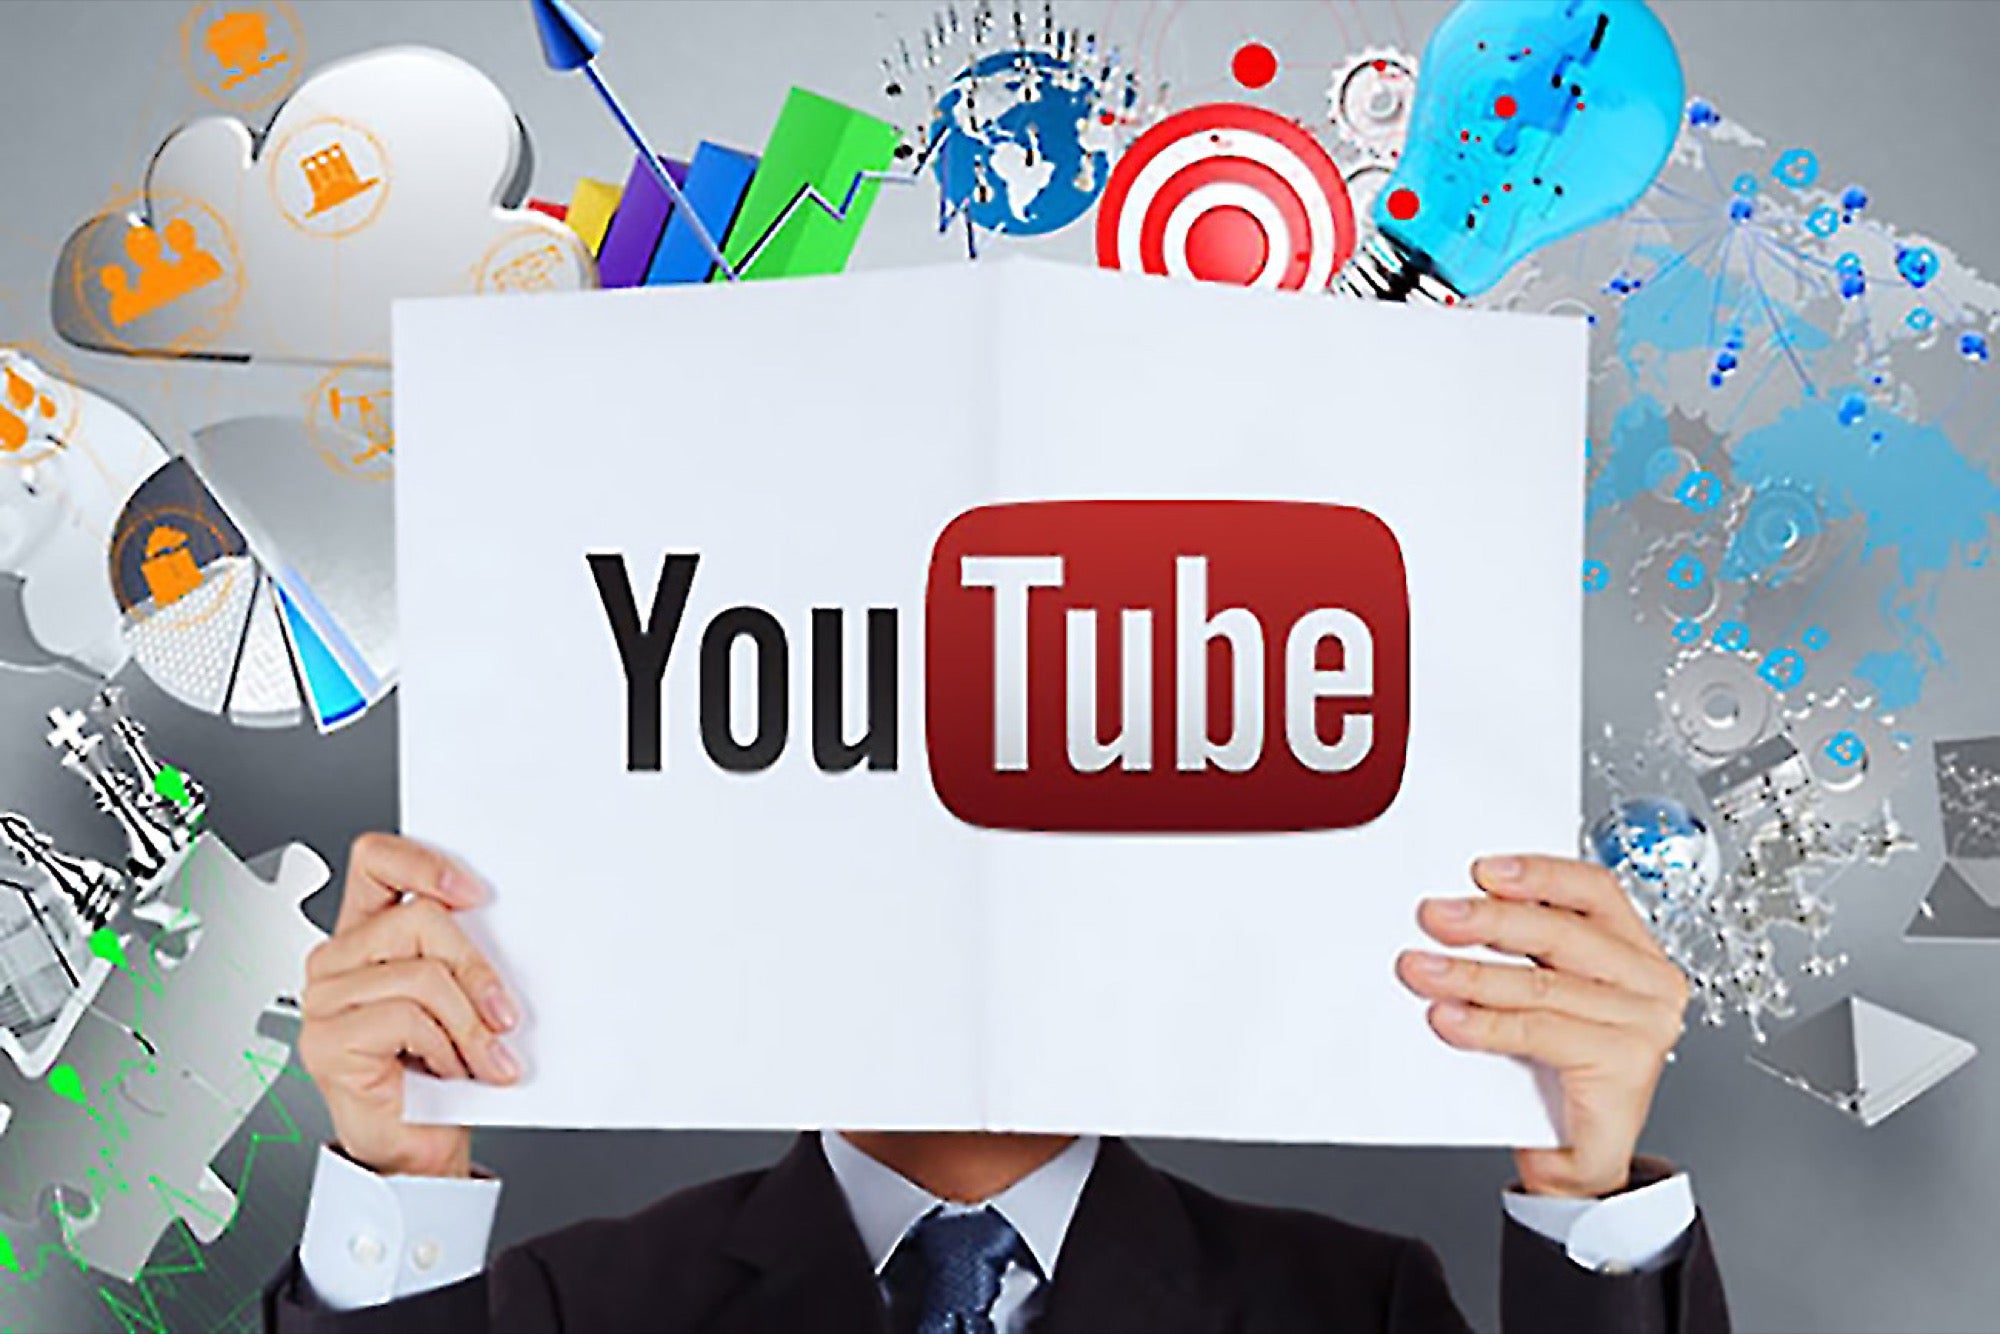 YouTube Marketing Course